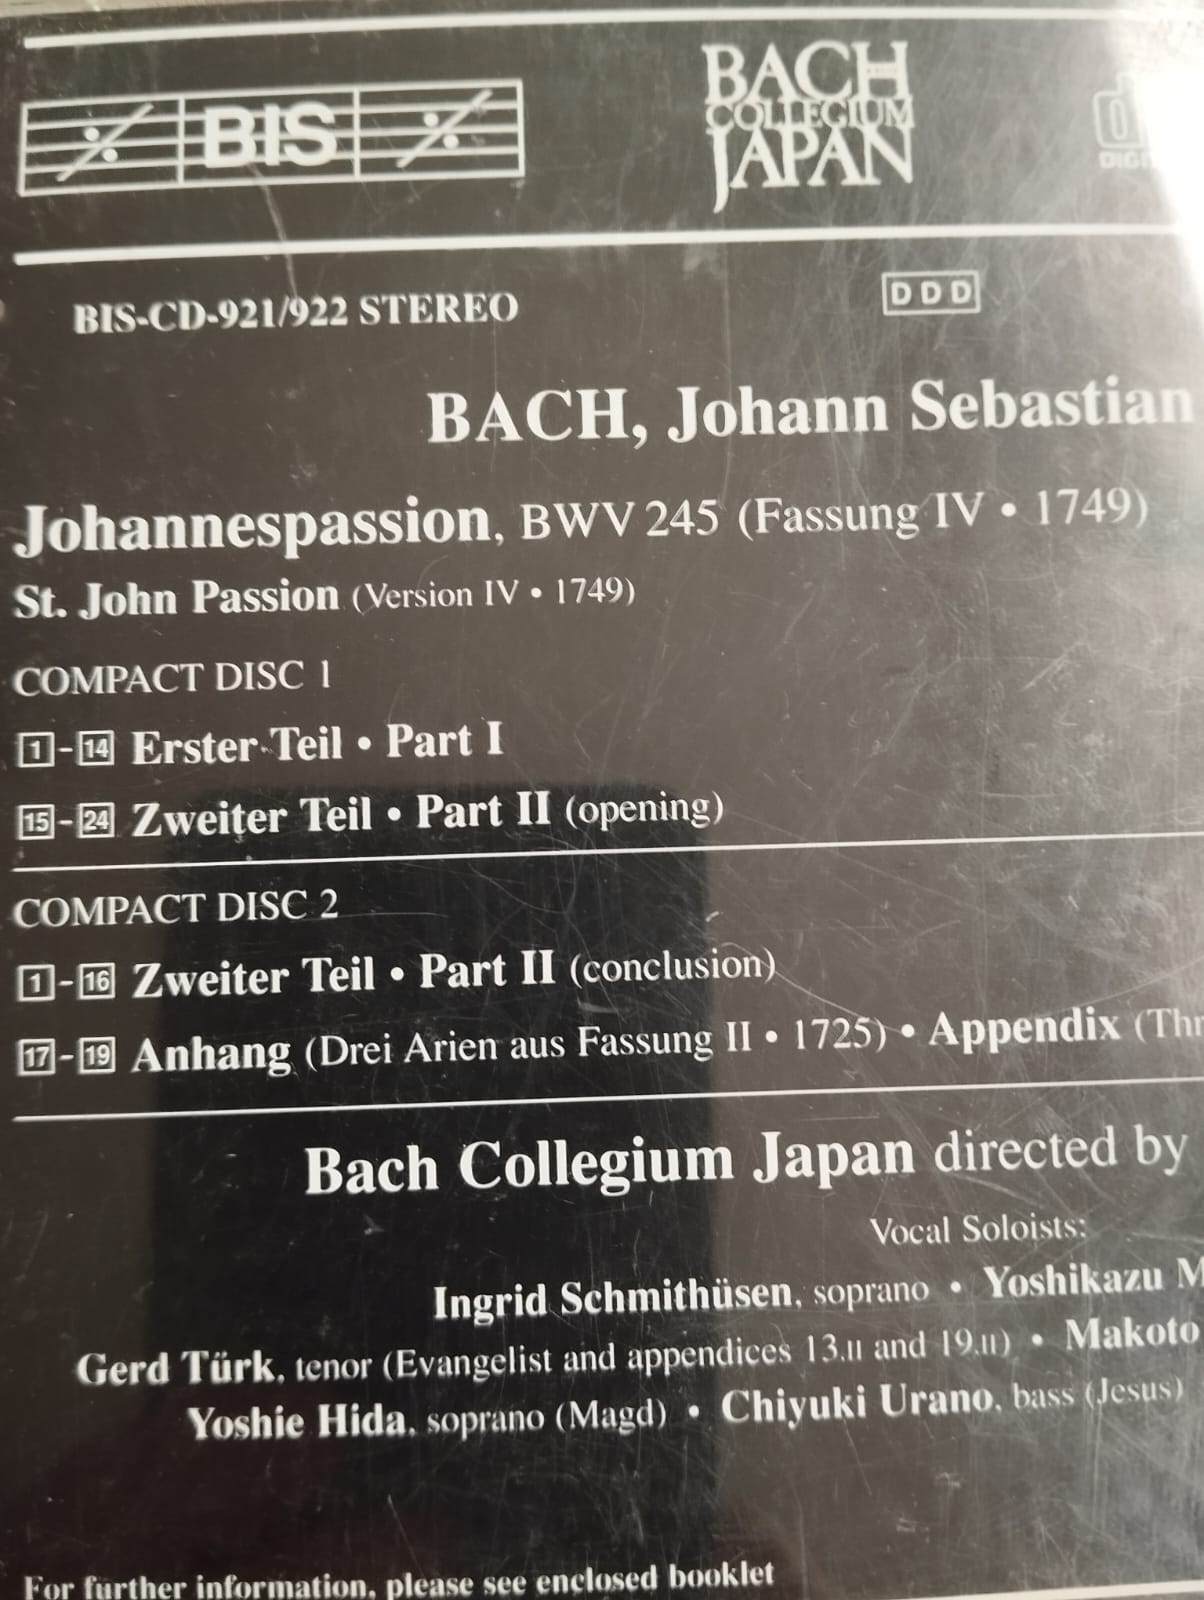 Bach Collegium Japan - Masaaki Suzuki - 1999 Avusturya Basım CD Albüm - 2.El